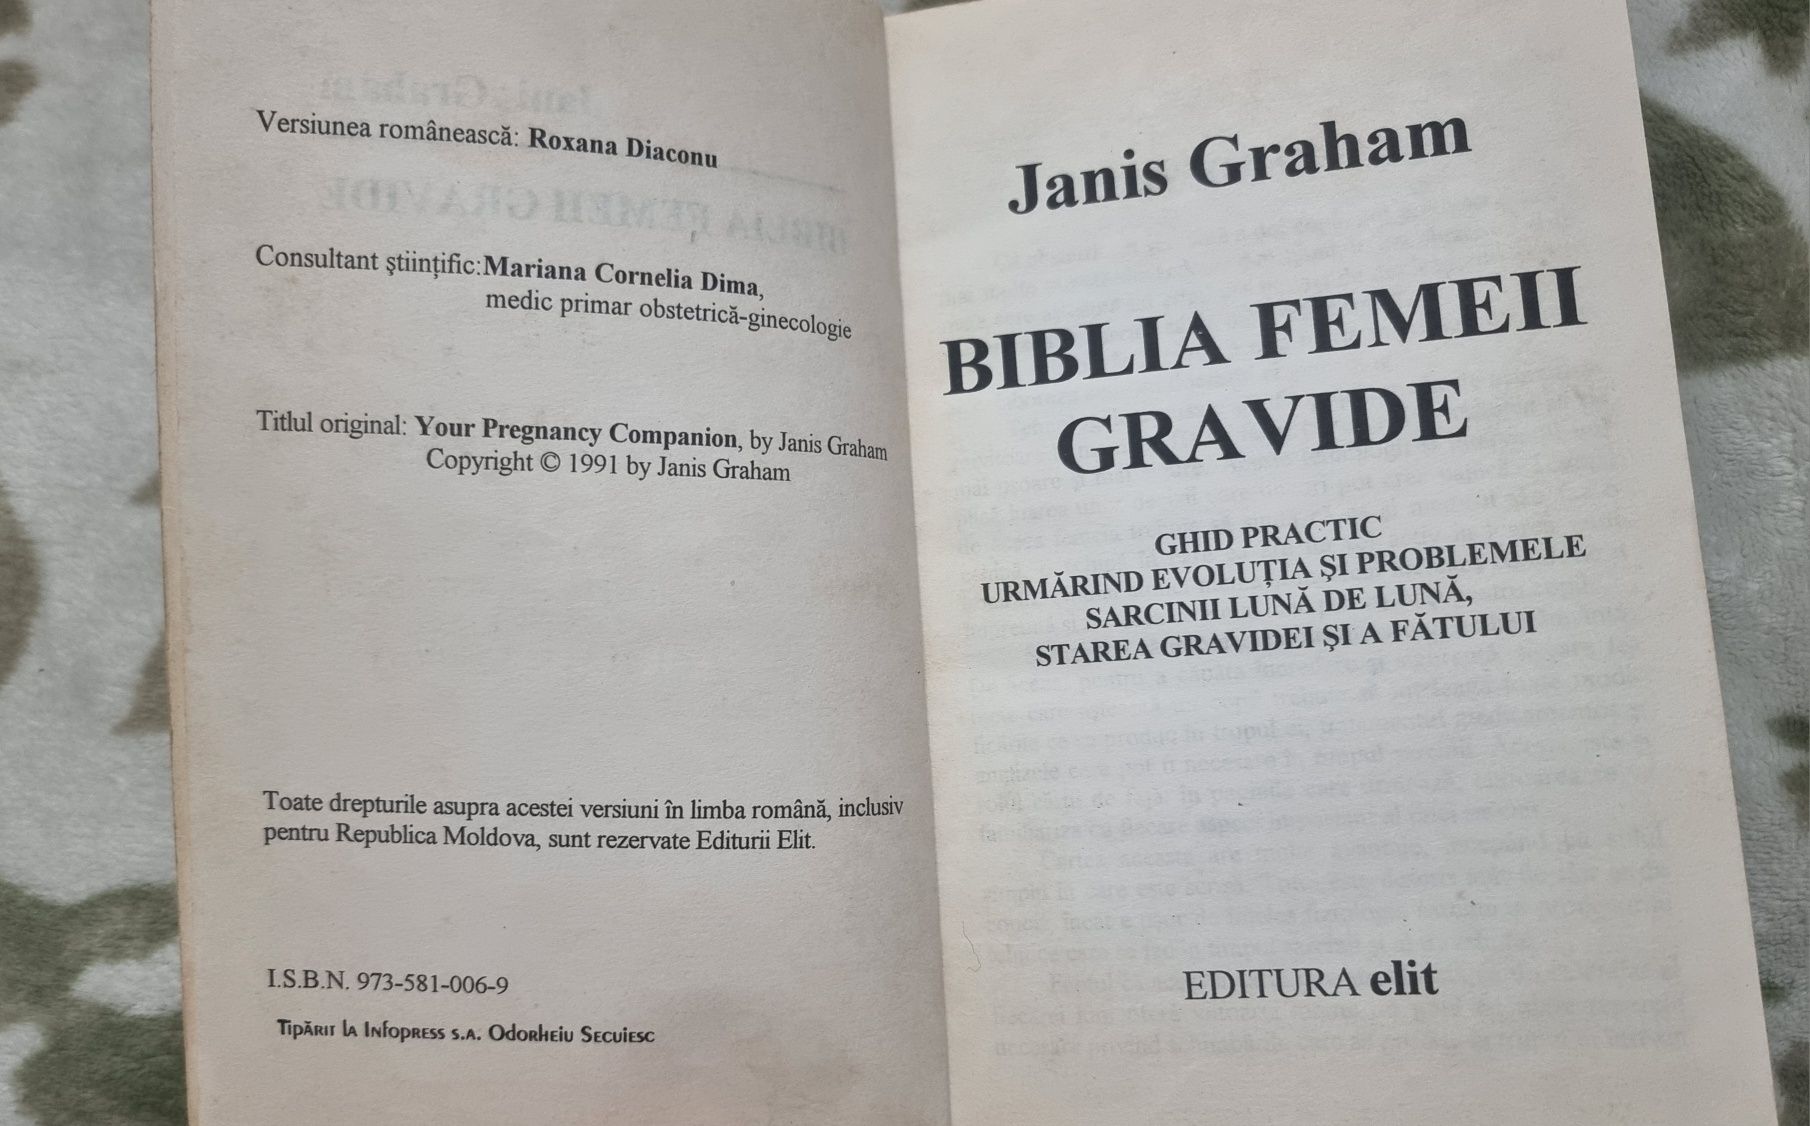 Biblia femeii gravide